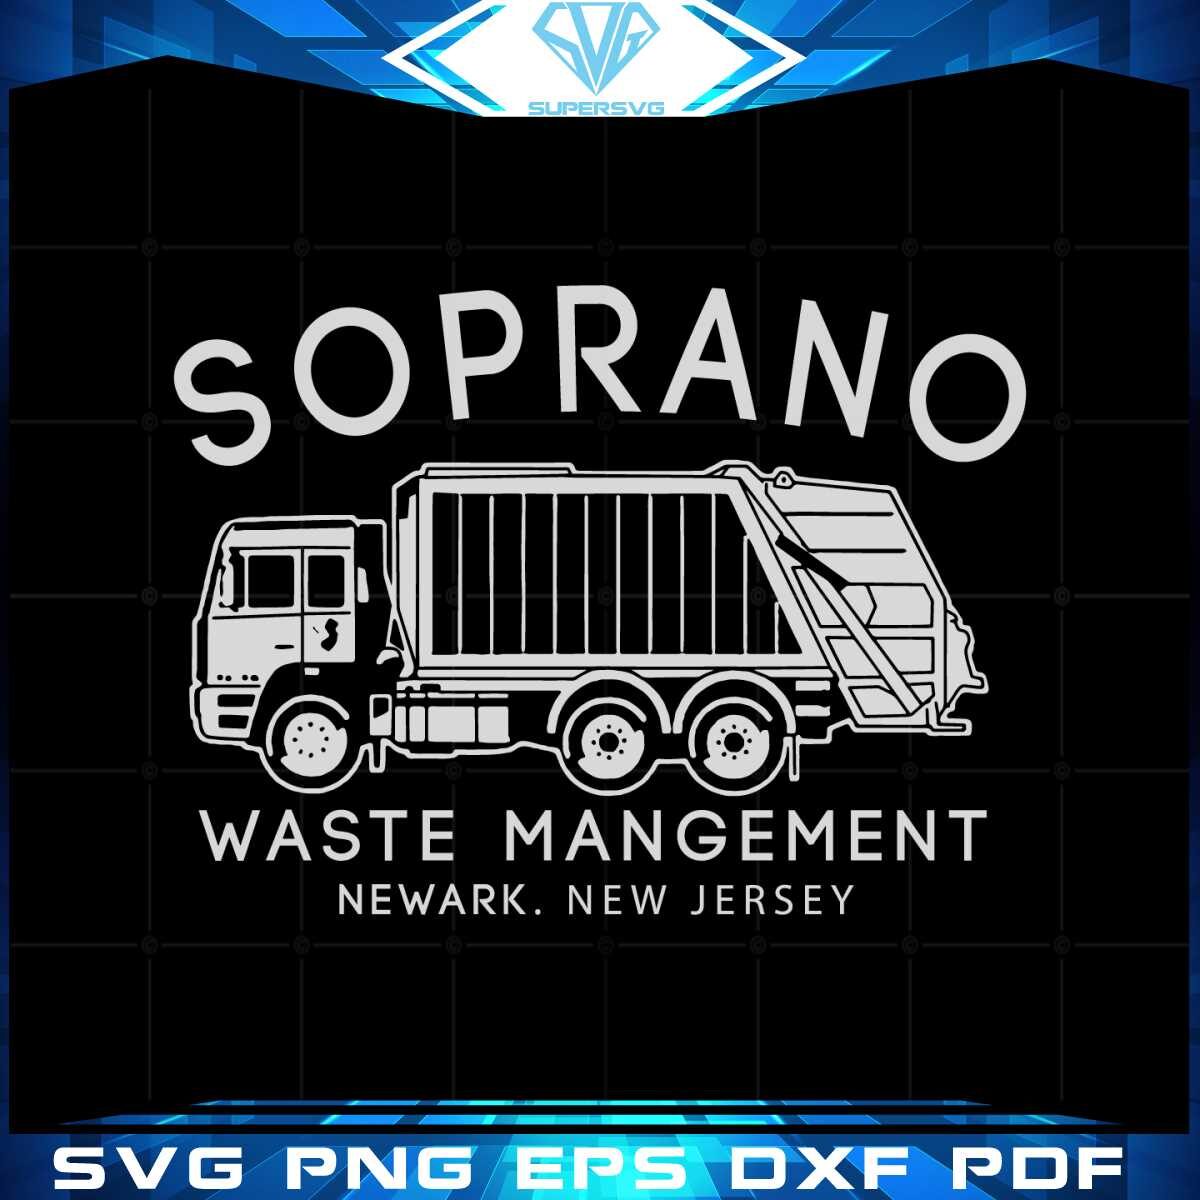 soprano-waste-management-the-sopranos-new-jersey-svg-cutting-files